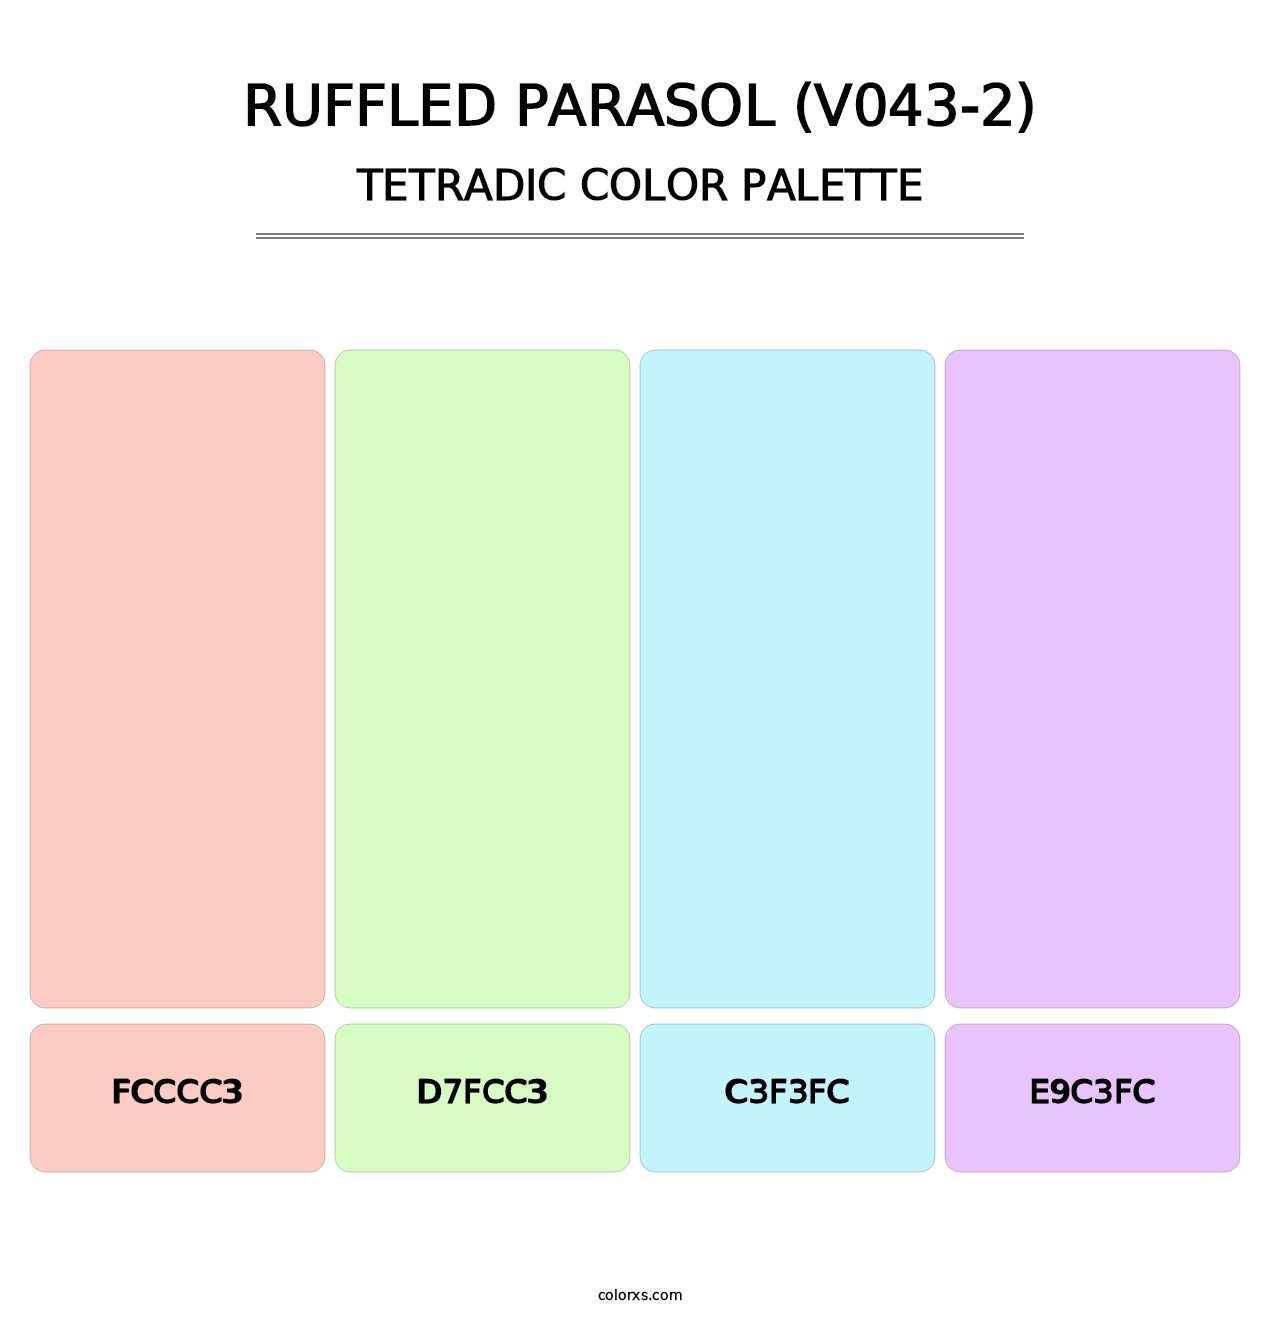 Ruffled Parasol (V043-2) - Tetradic Color Palette